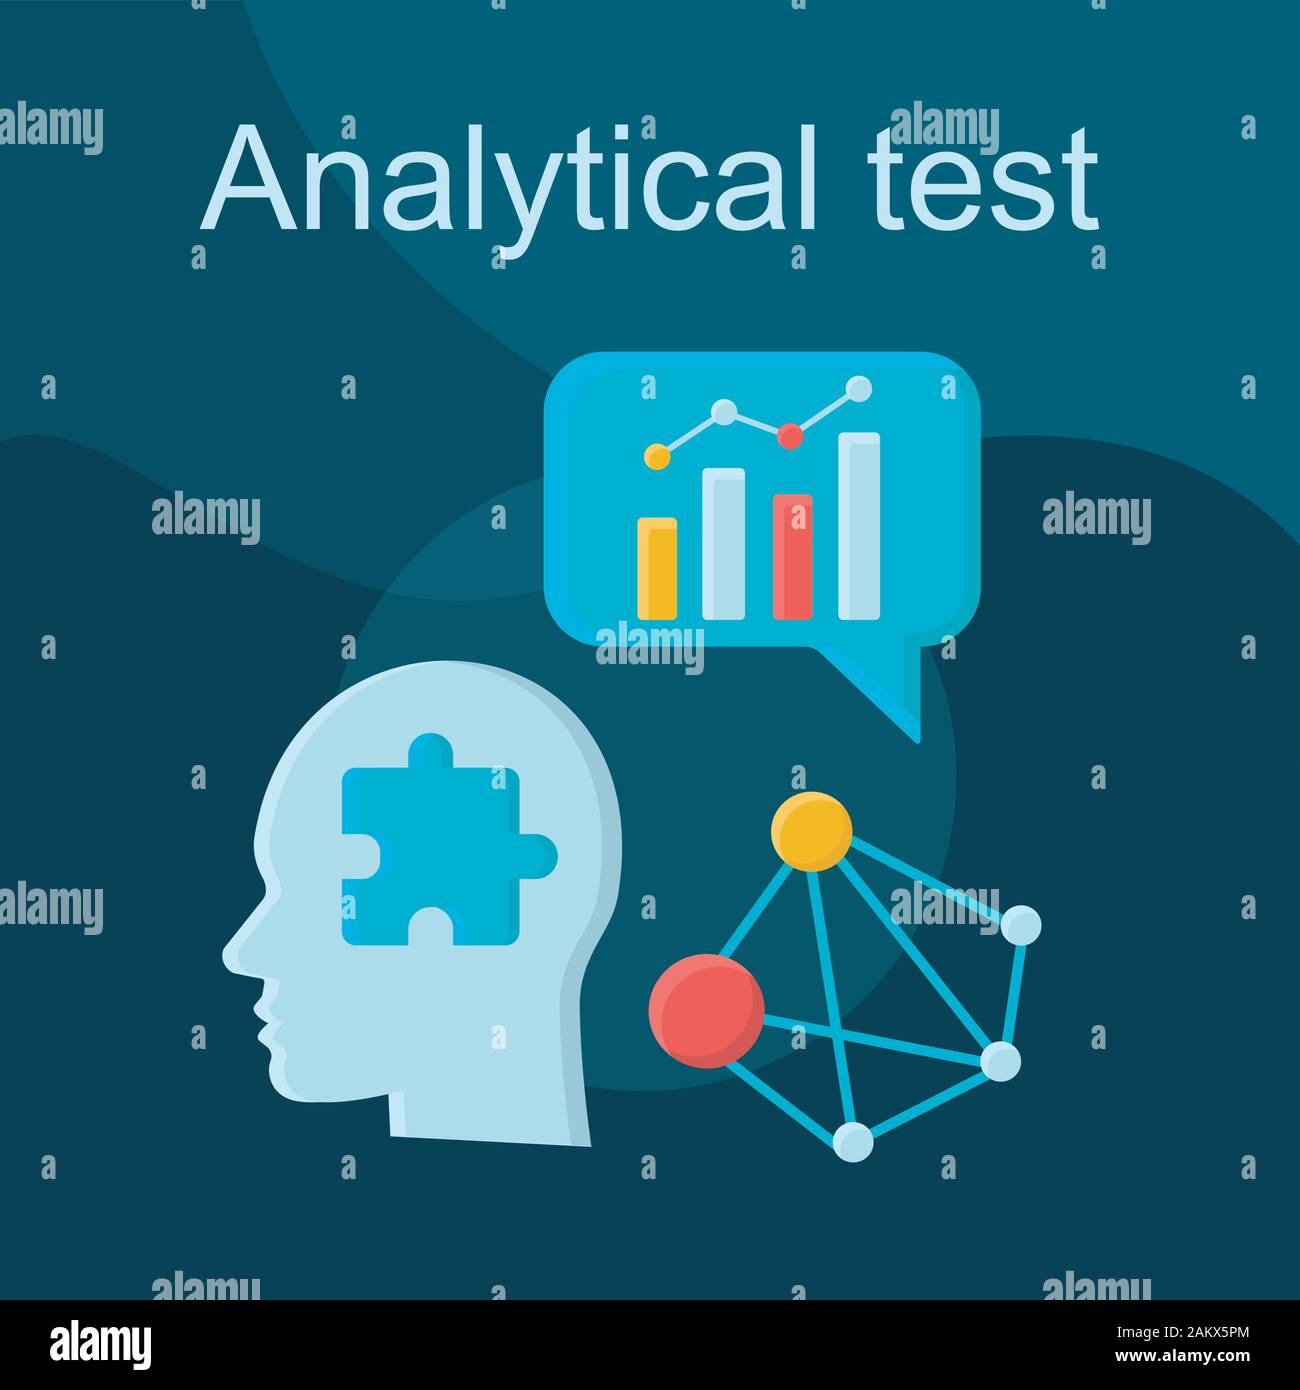 analytical (academic problem solving) intelligence